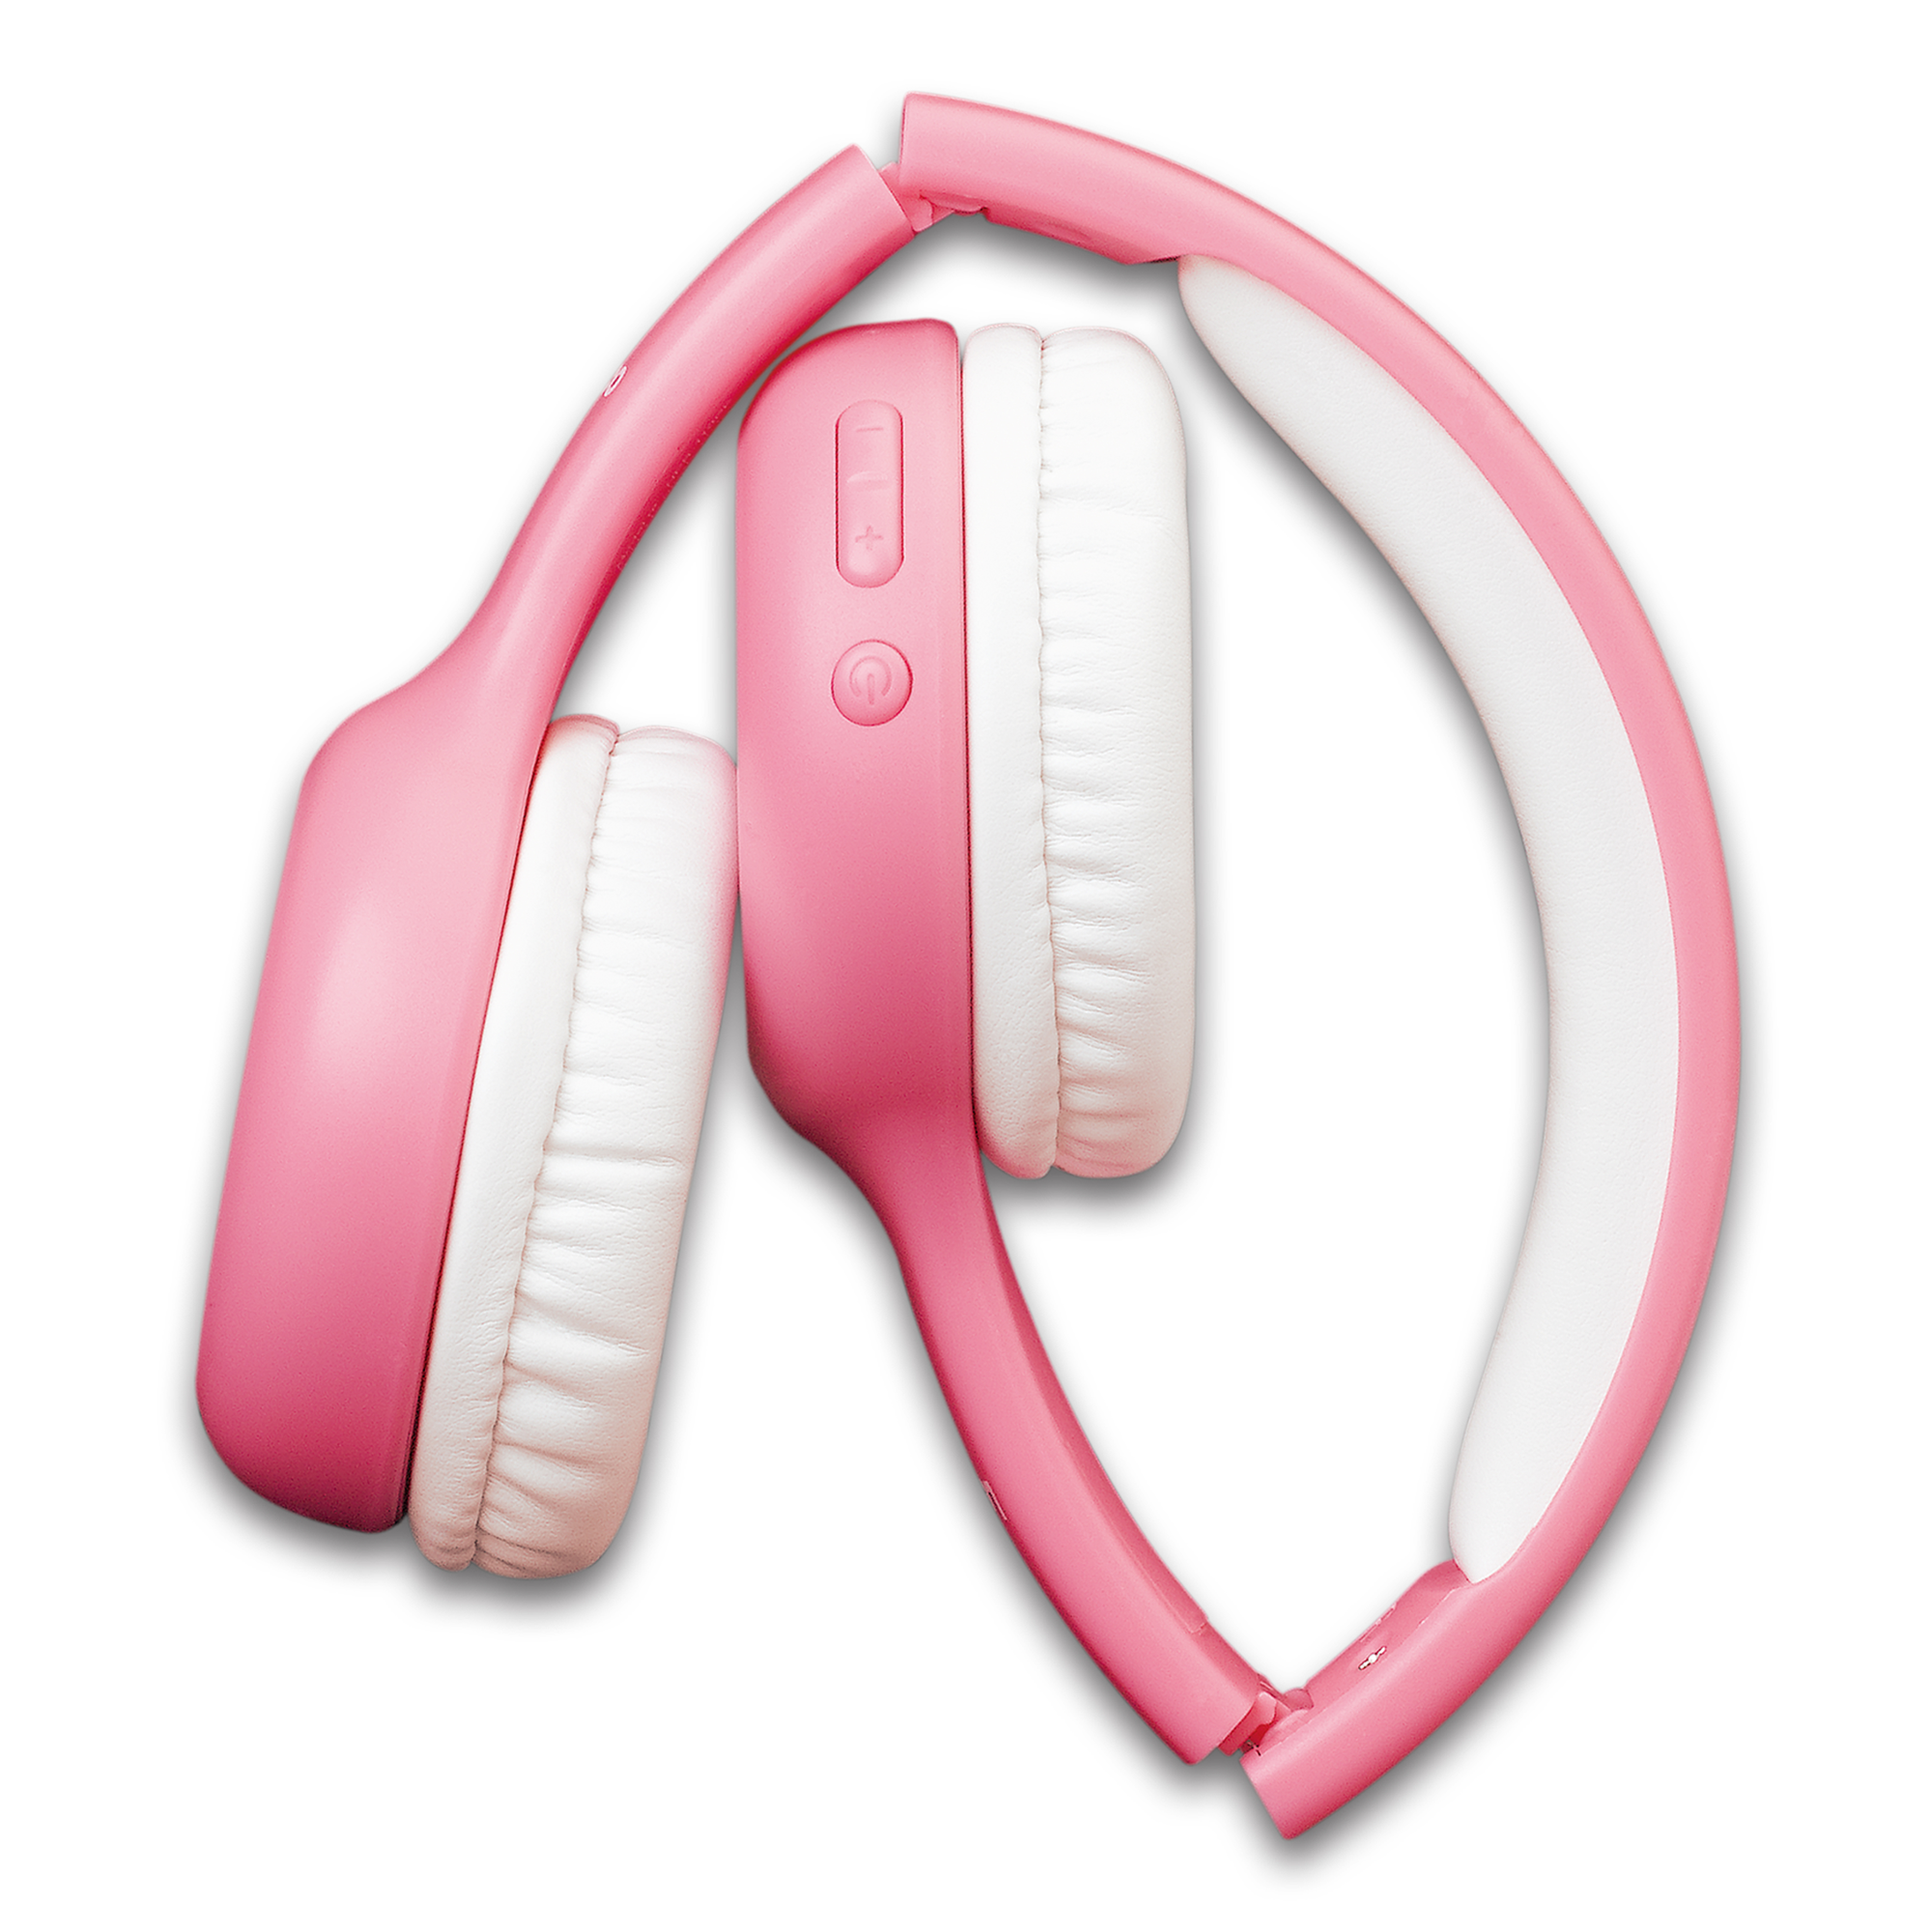 LENCO HPB-110PK - Bluetooth Bluetooth Kinder, faltbare On-ear Headphone Pink